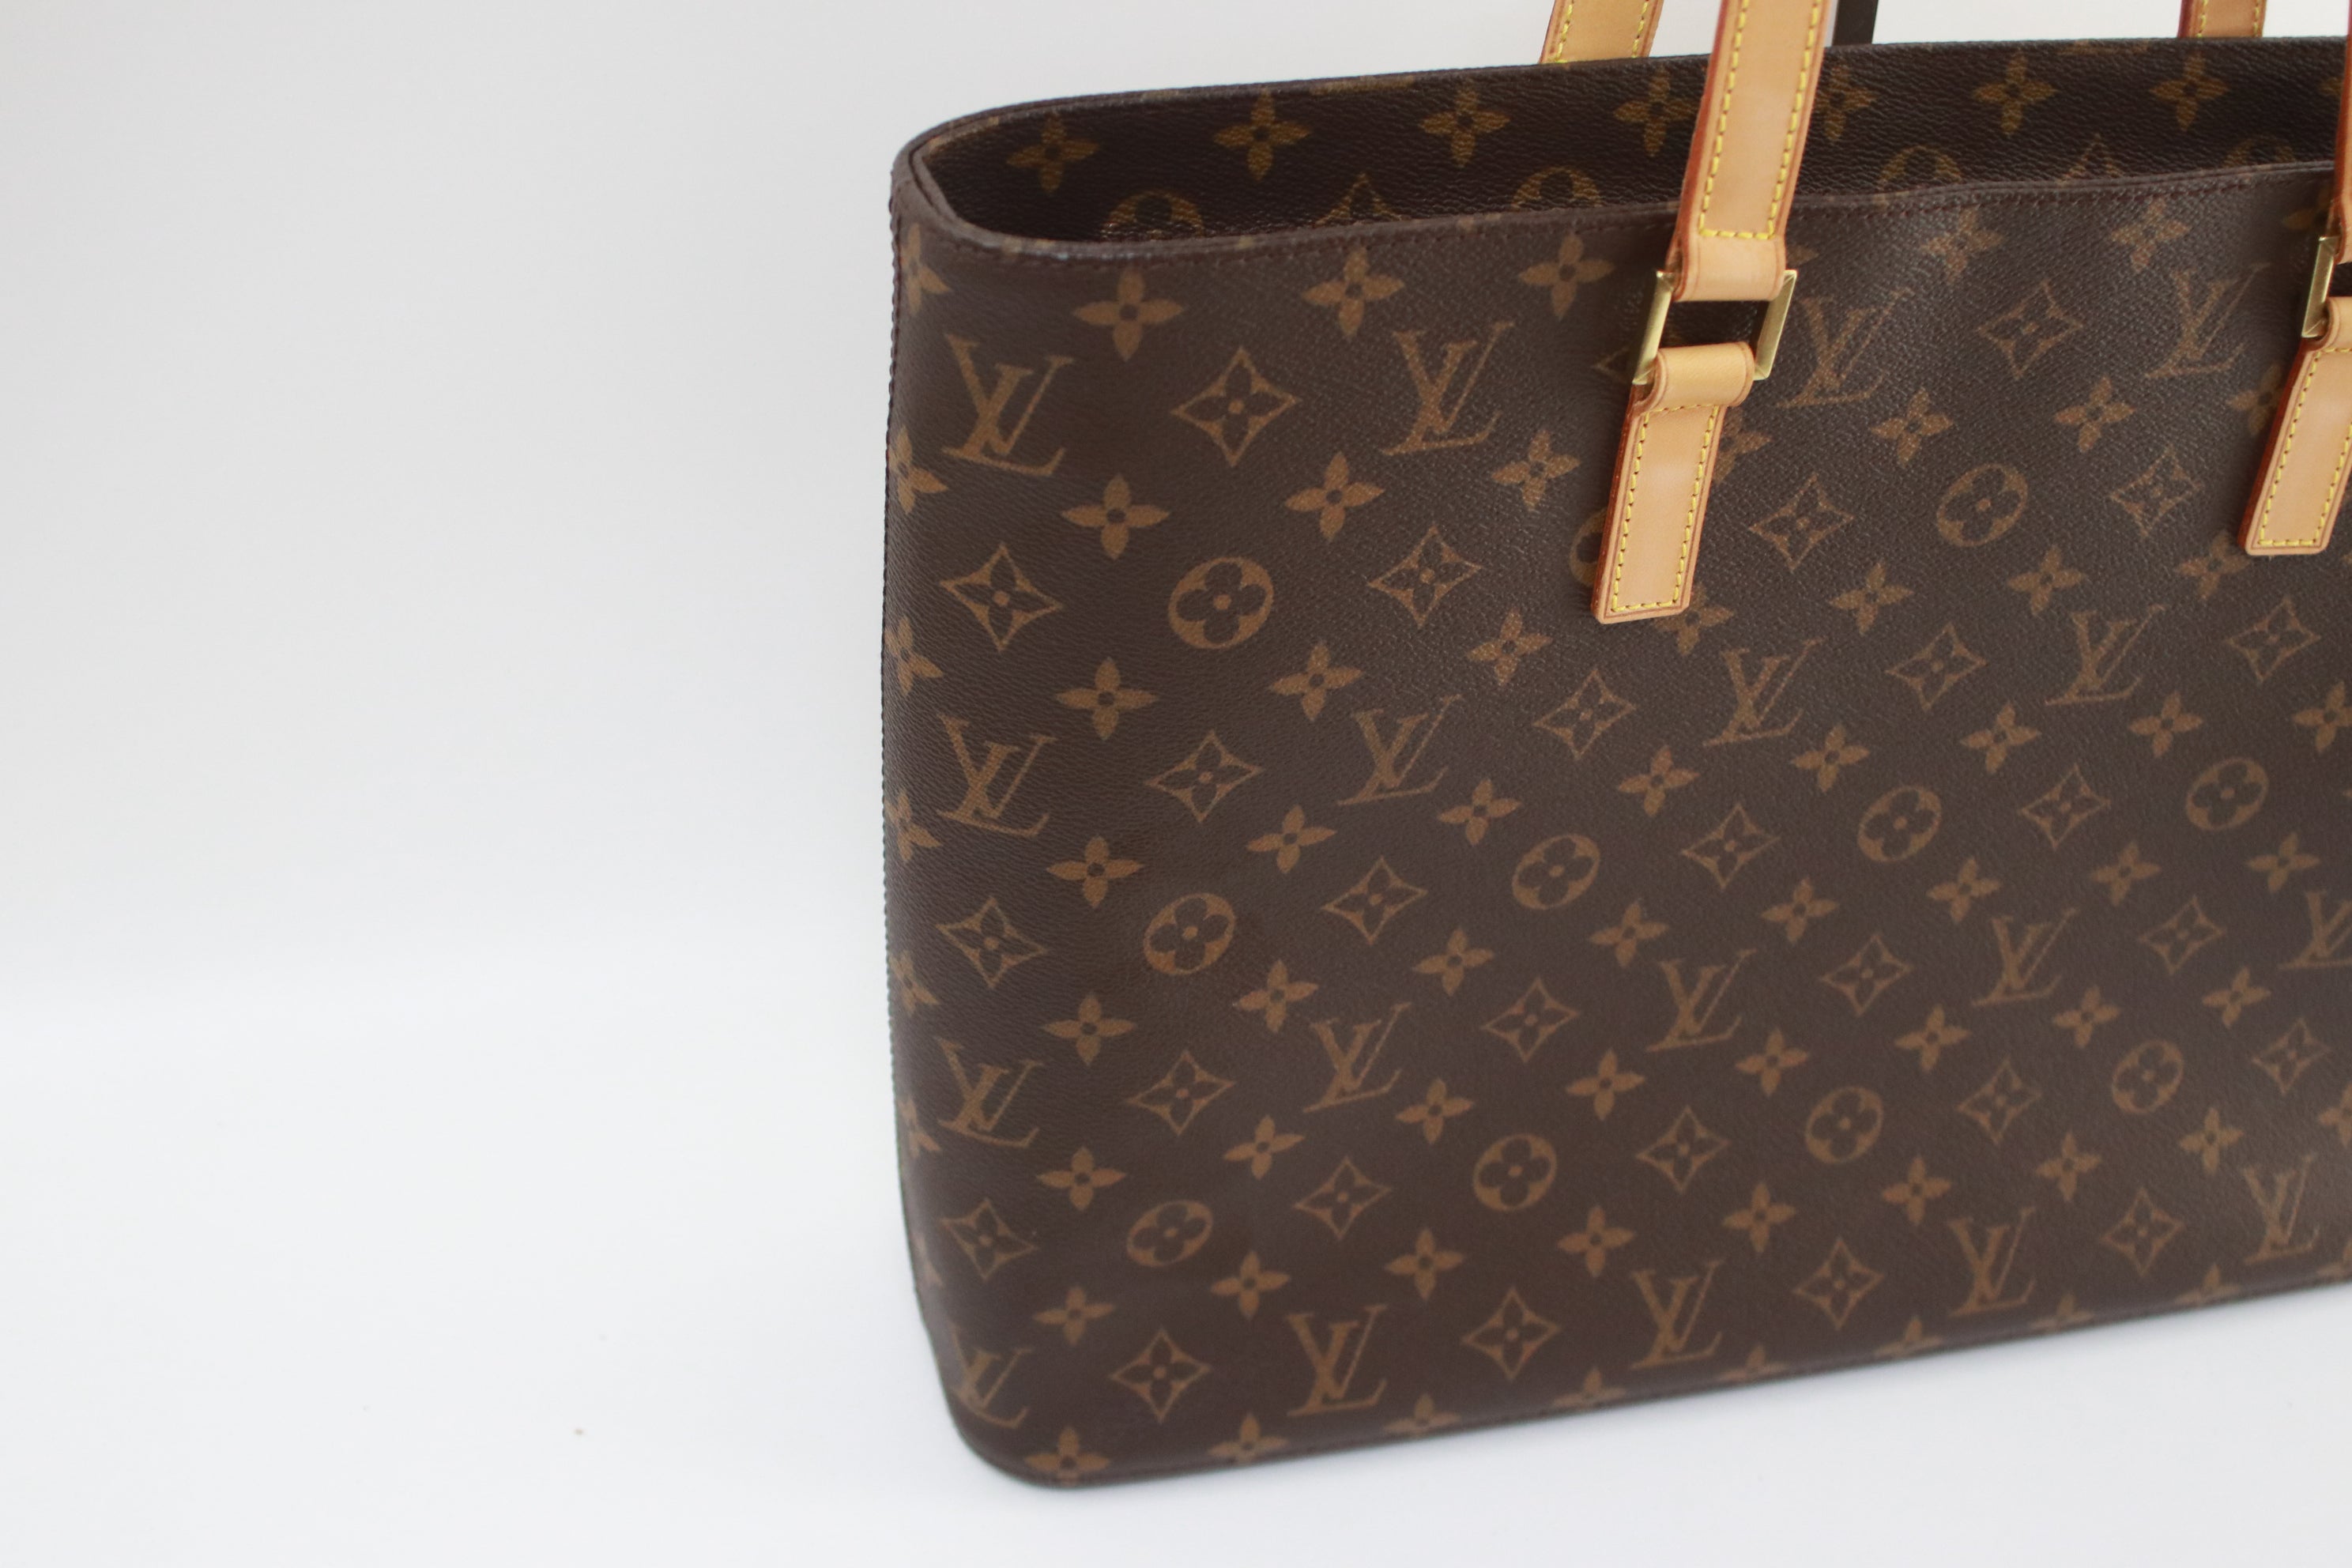 Louis Vuitton Alma PM Handbag Used (6776)